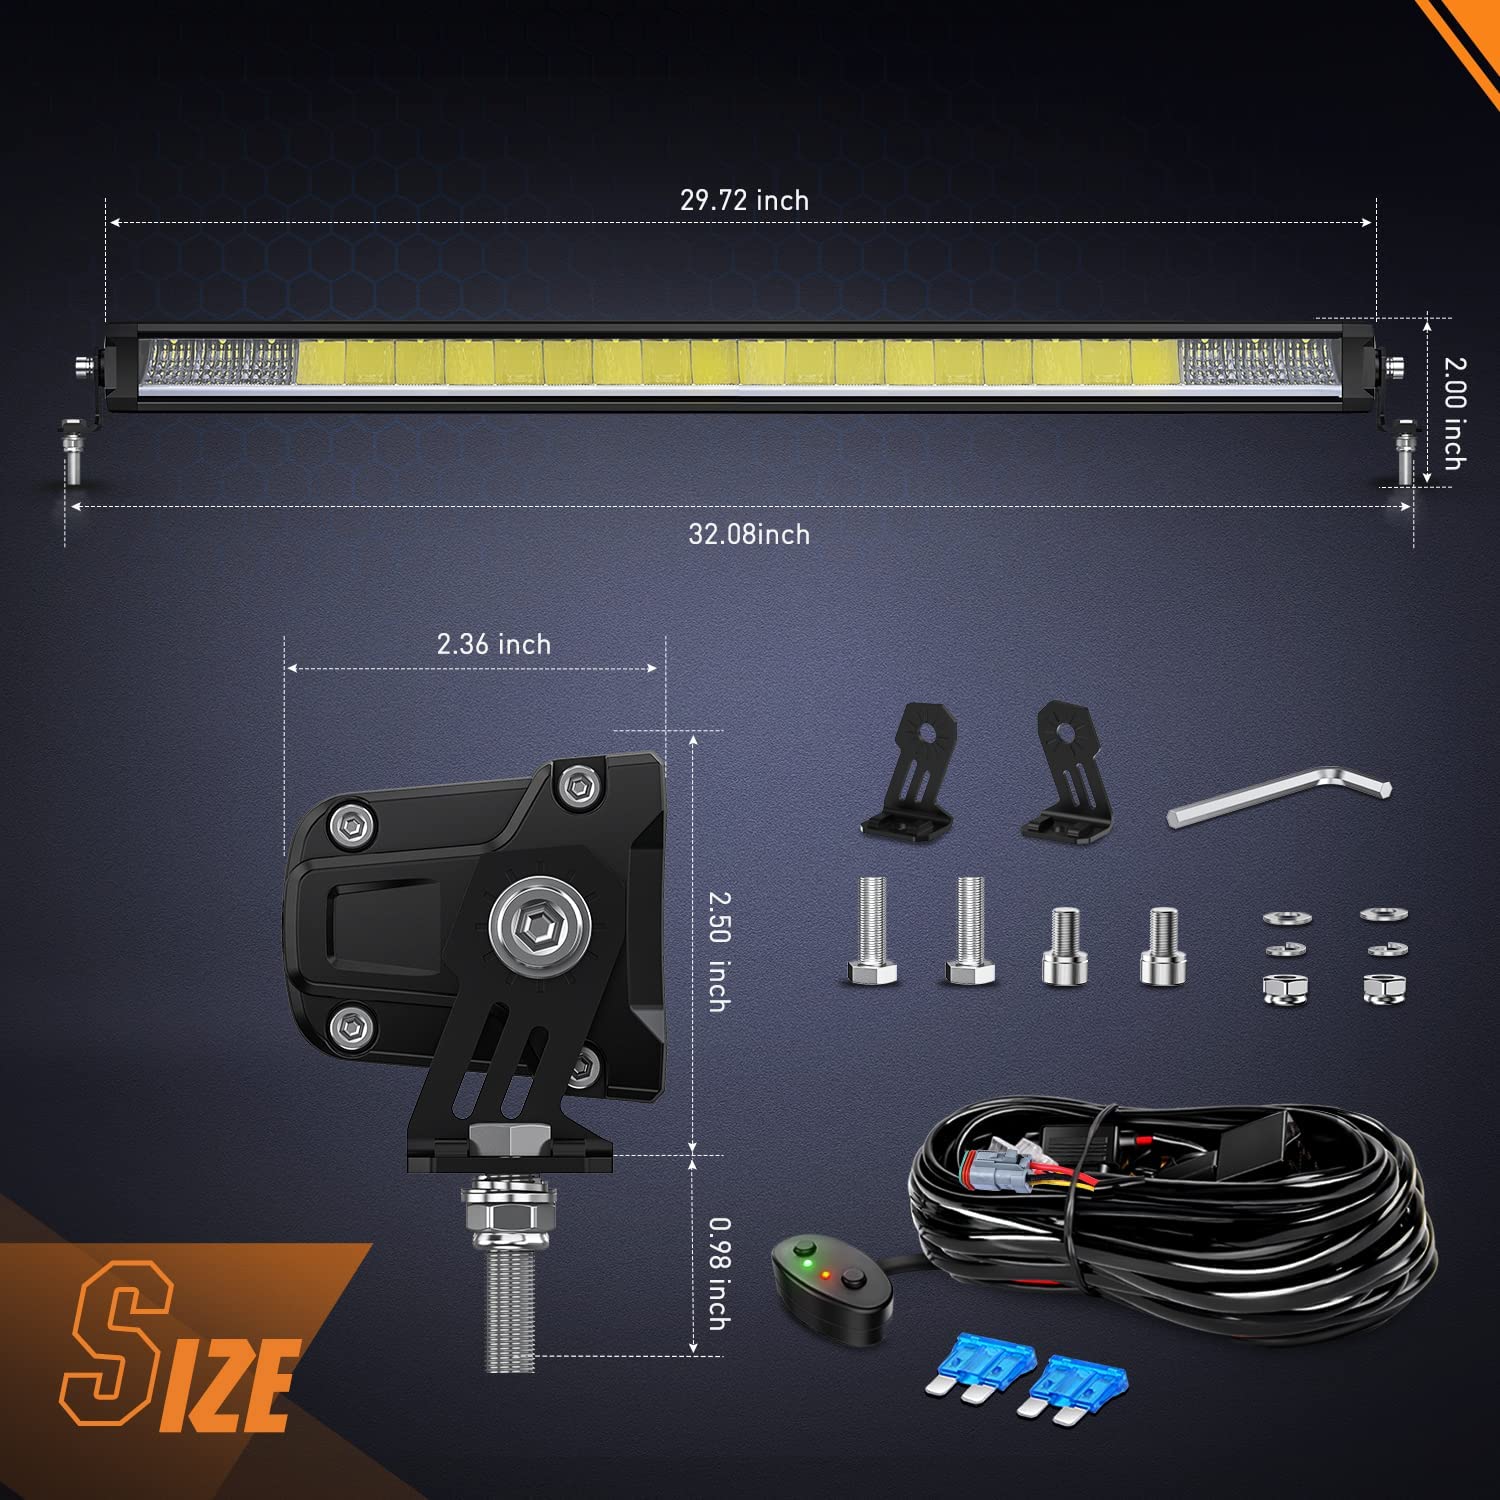 30" 120W 13000LM Slim Anti-Glare DRL Spot/Flood Led Light Bar | 16AWG DT Wire Nilight